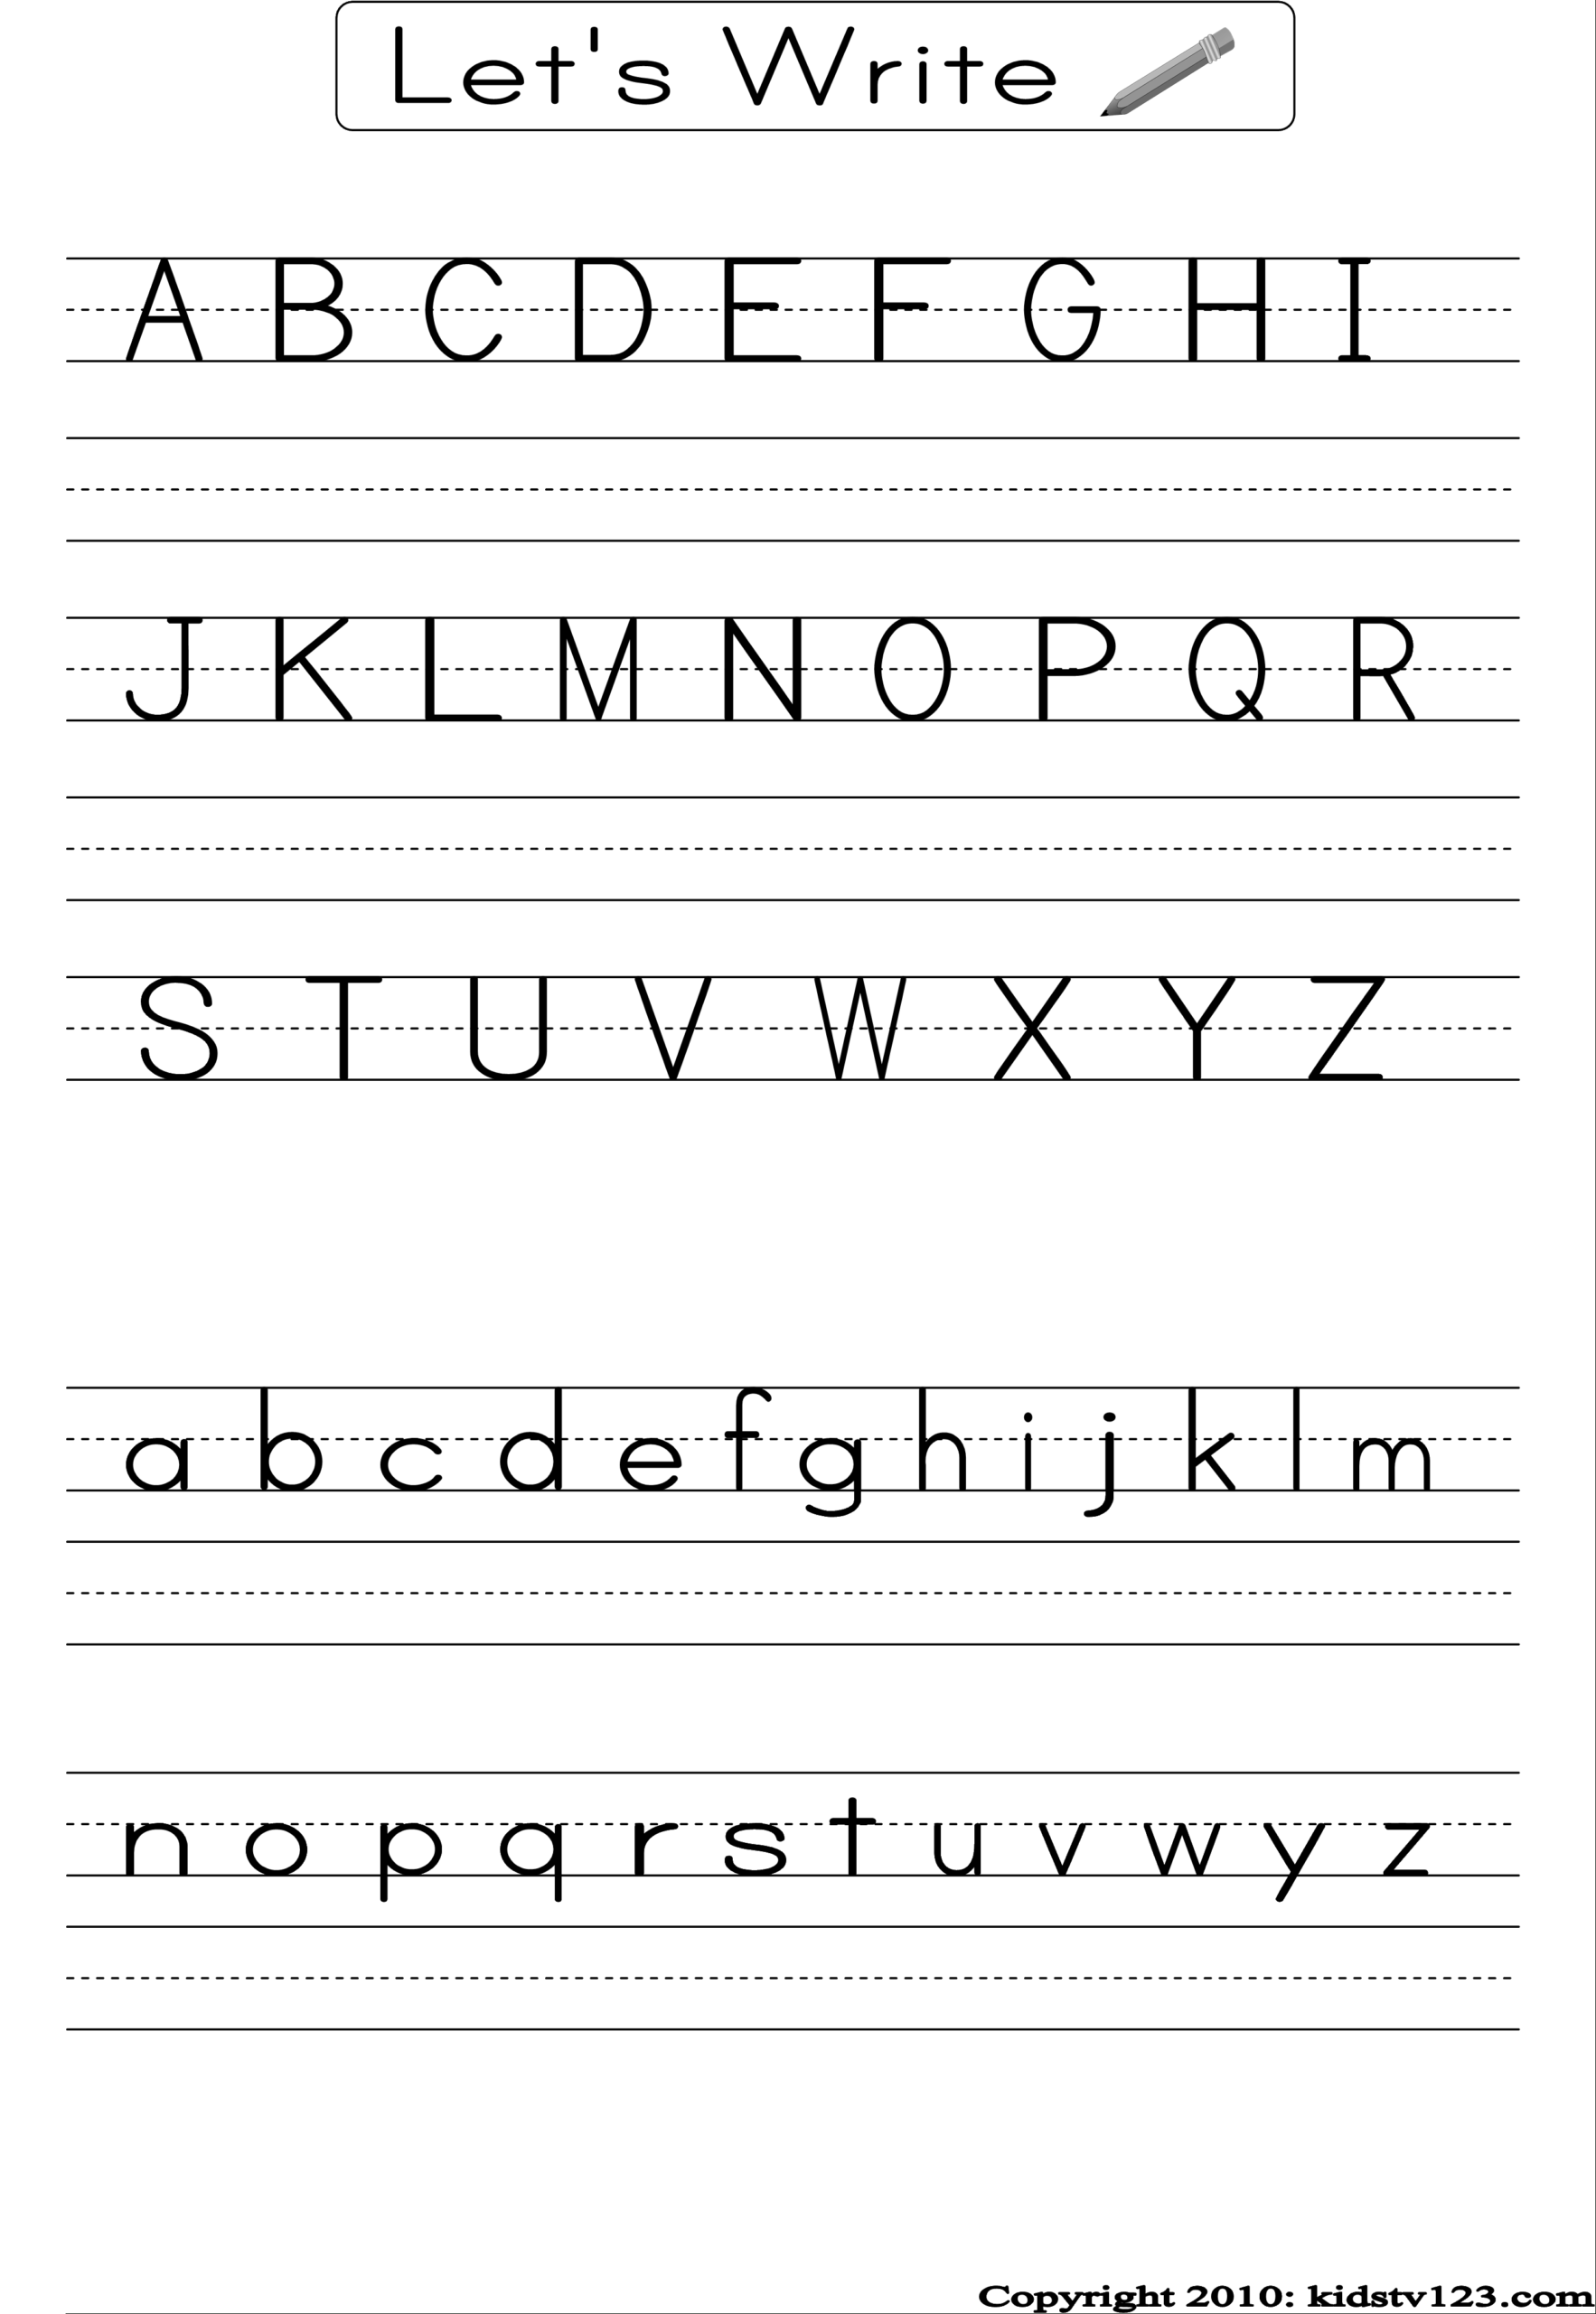 Alphabet Writing Practice Sheet | Alphabet Writing Practice regarding Alphabet Handwriting Worksheets For Kindergarten